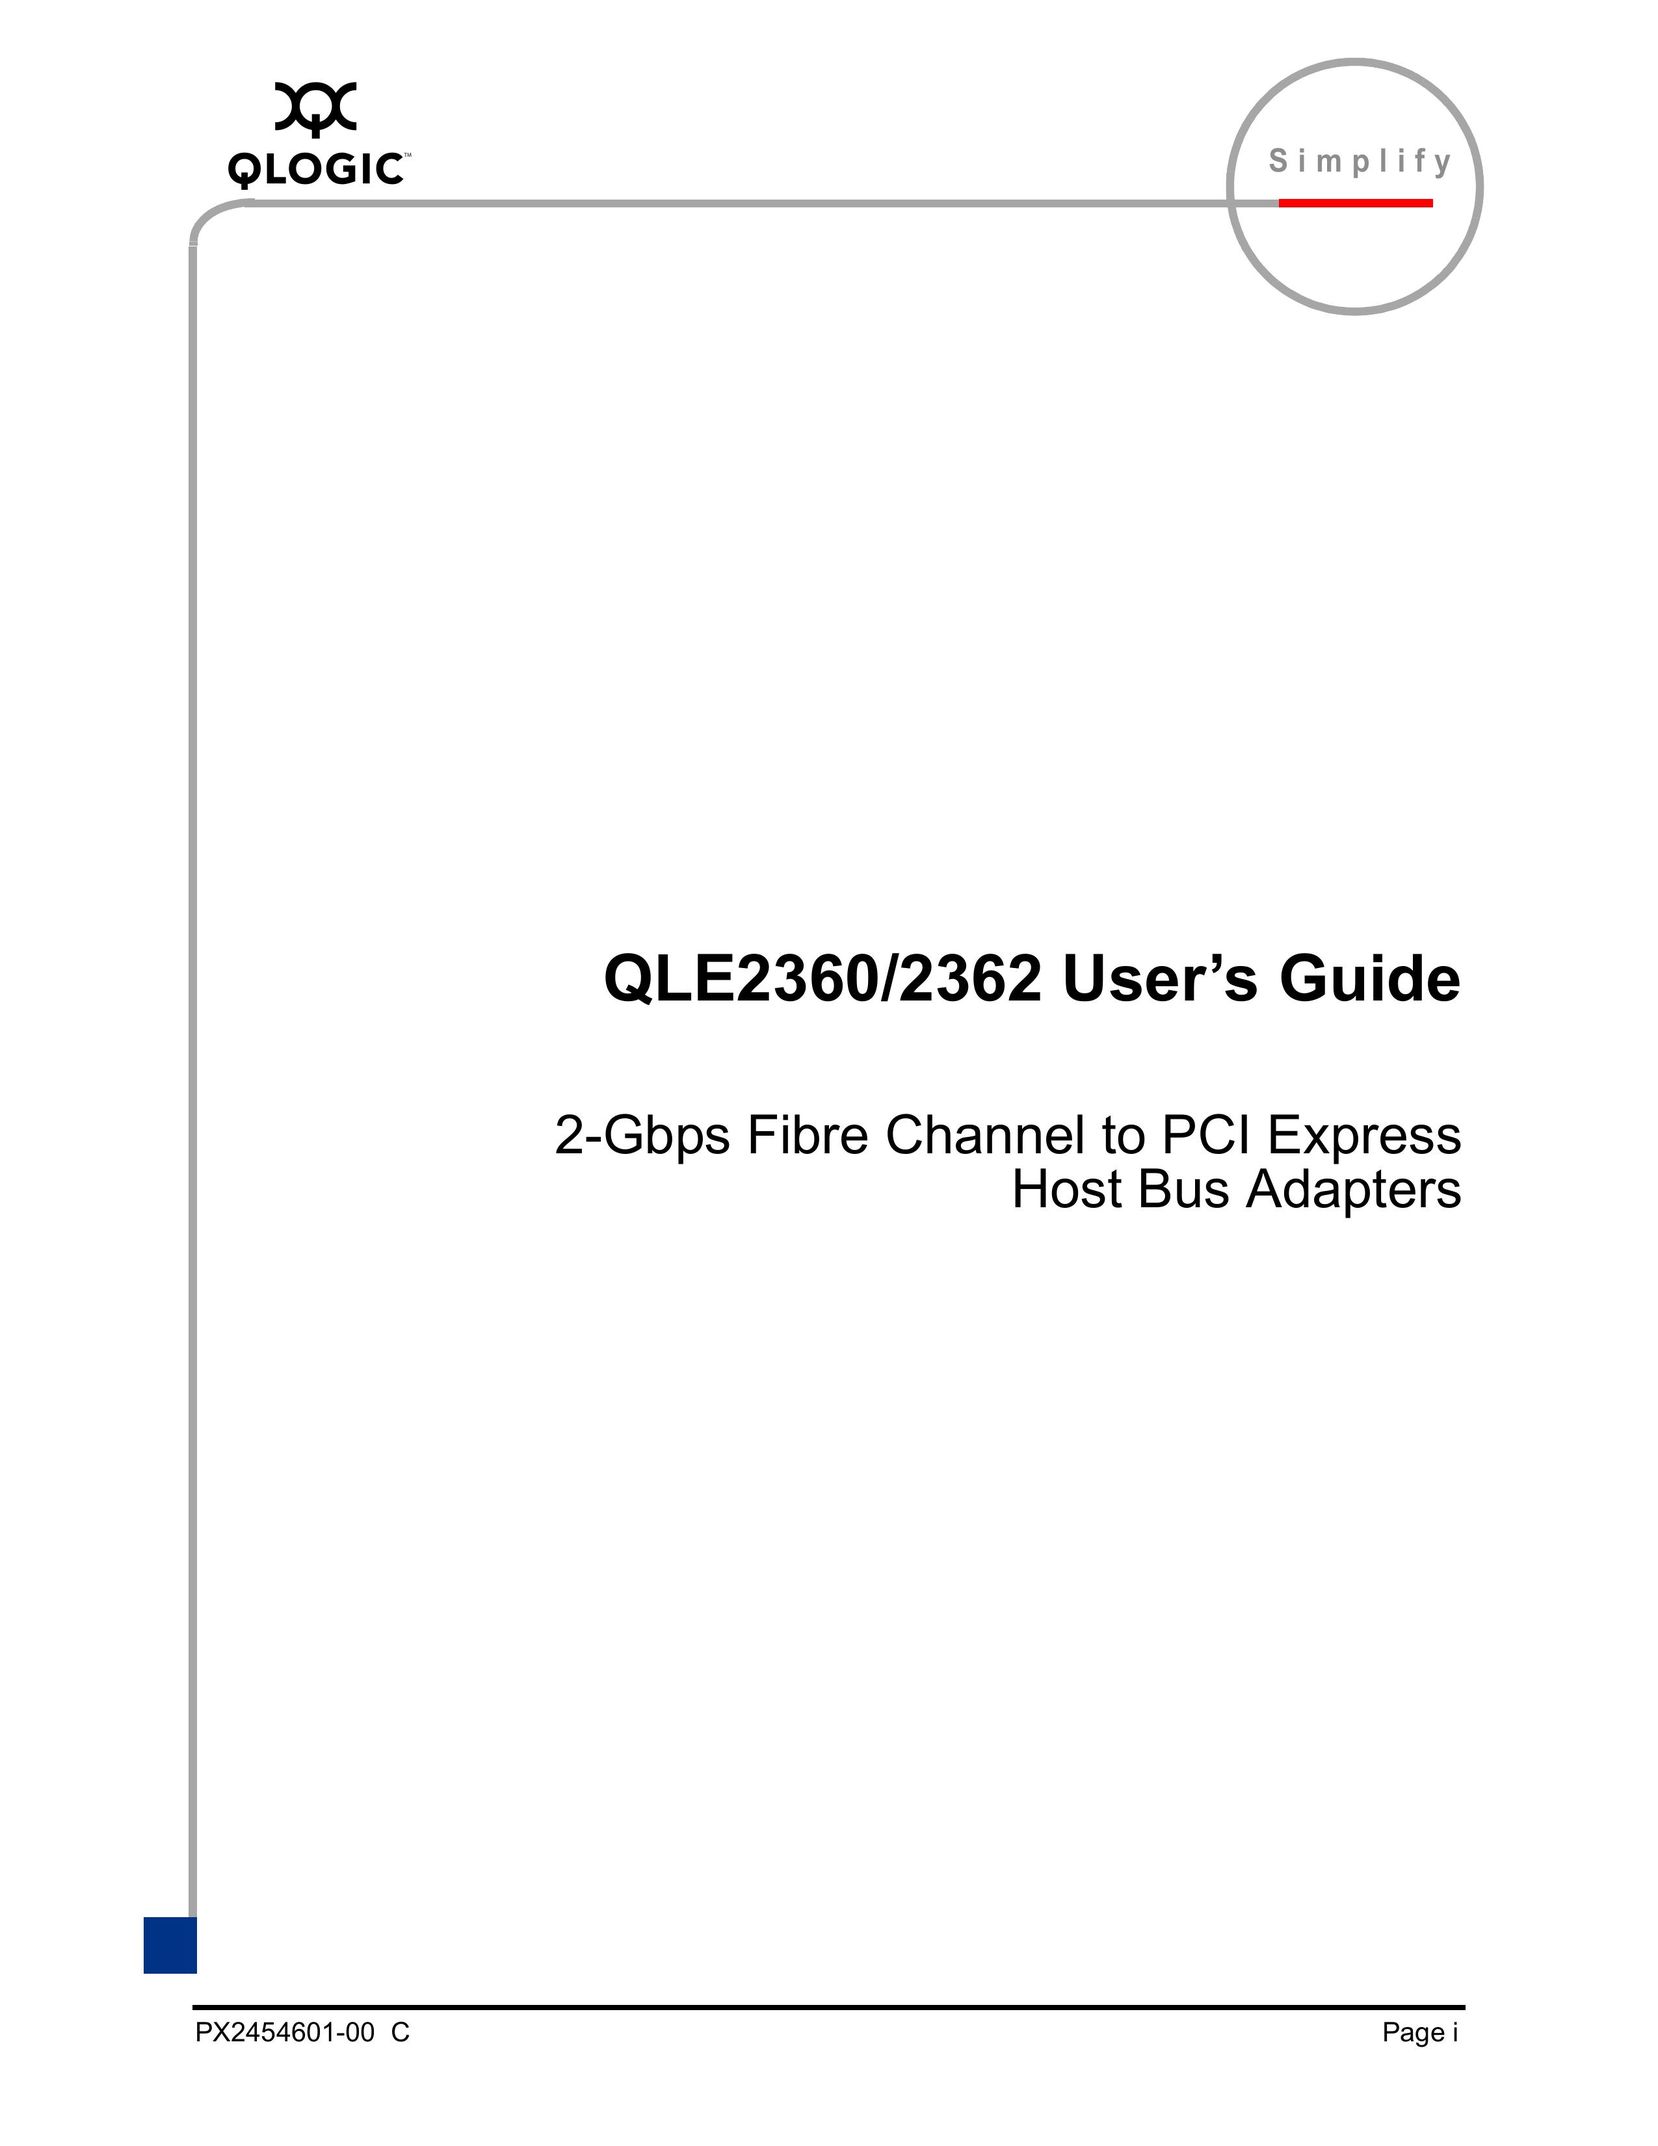 Q-Logic QLE2362 Computer Hardware User Manual